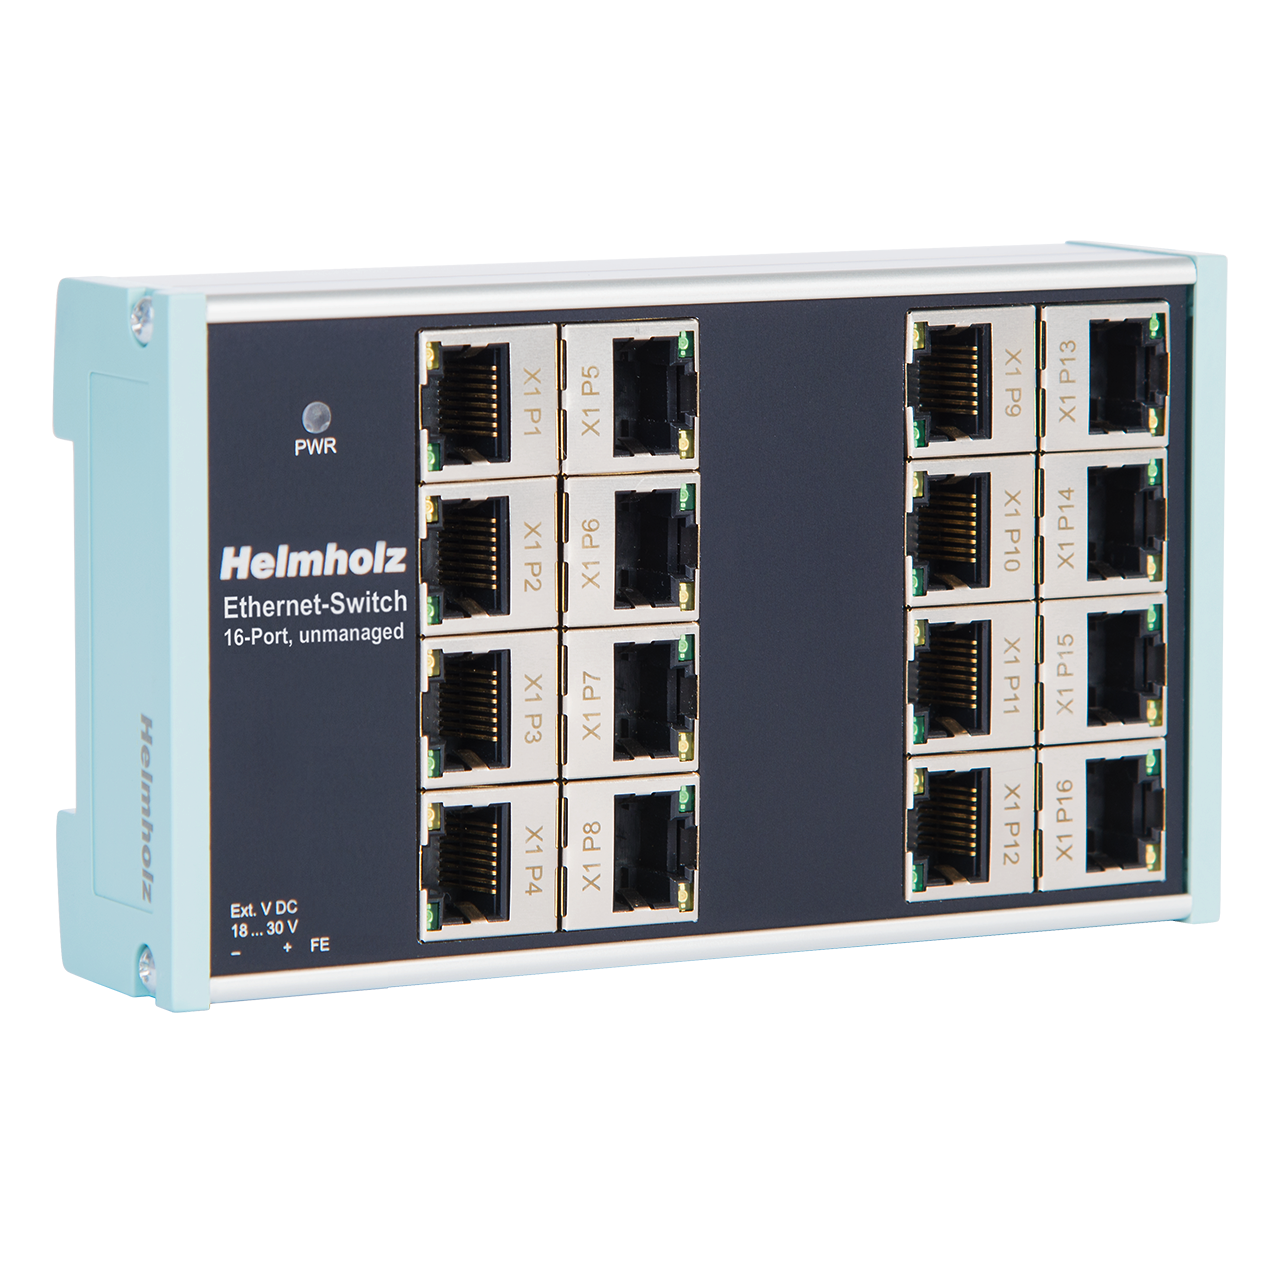 Helmholz Ethernet-Switch 16 puertos, no administrado, 10/100 MBit montaje en riel DIN 700-840-16S01